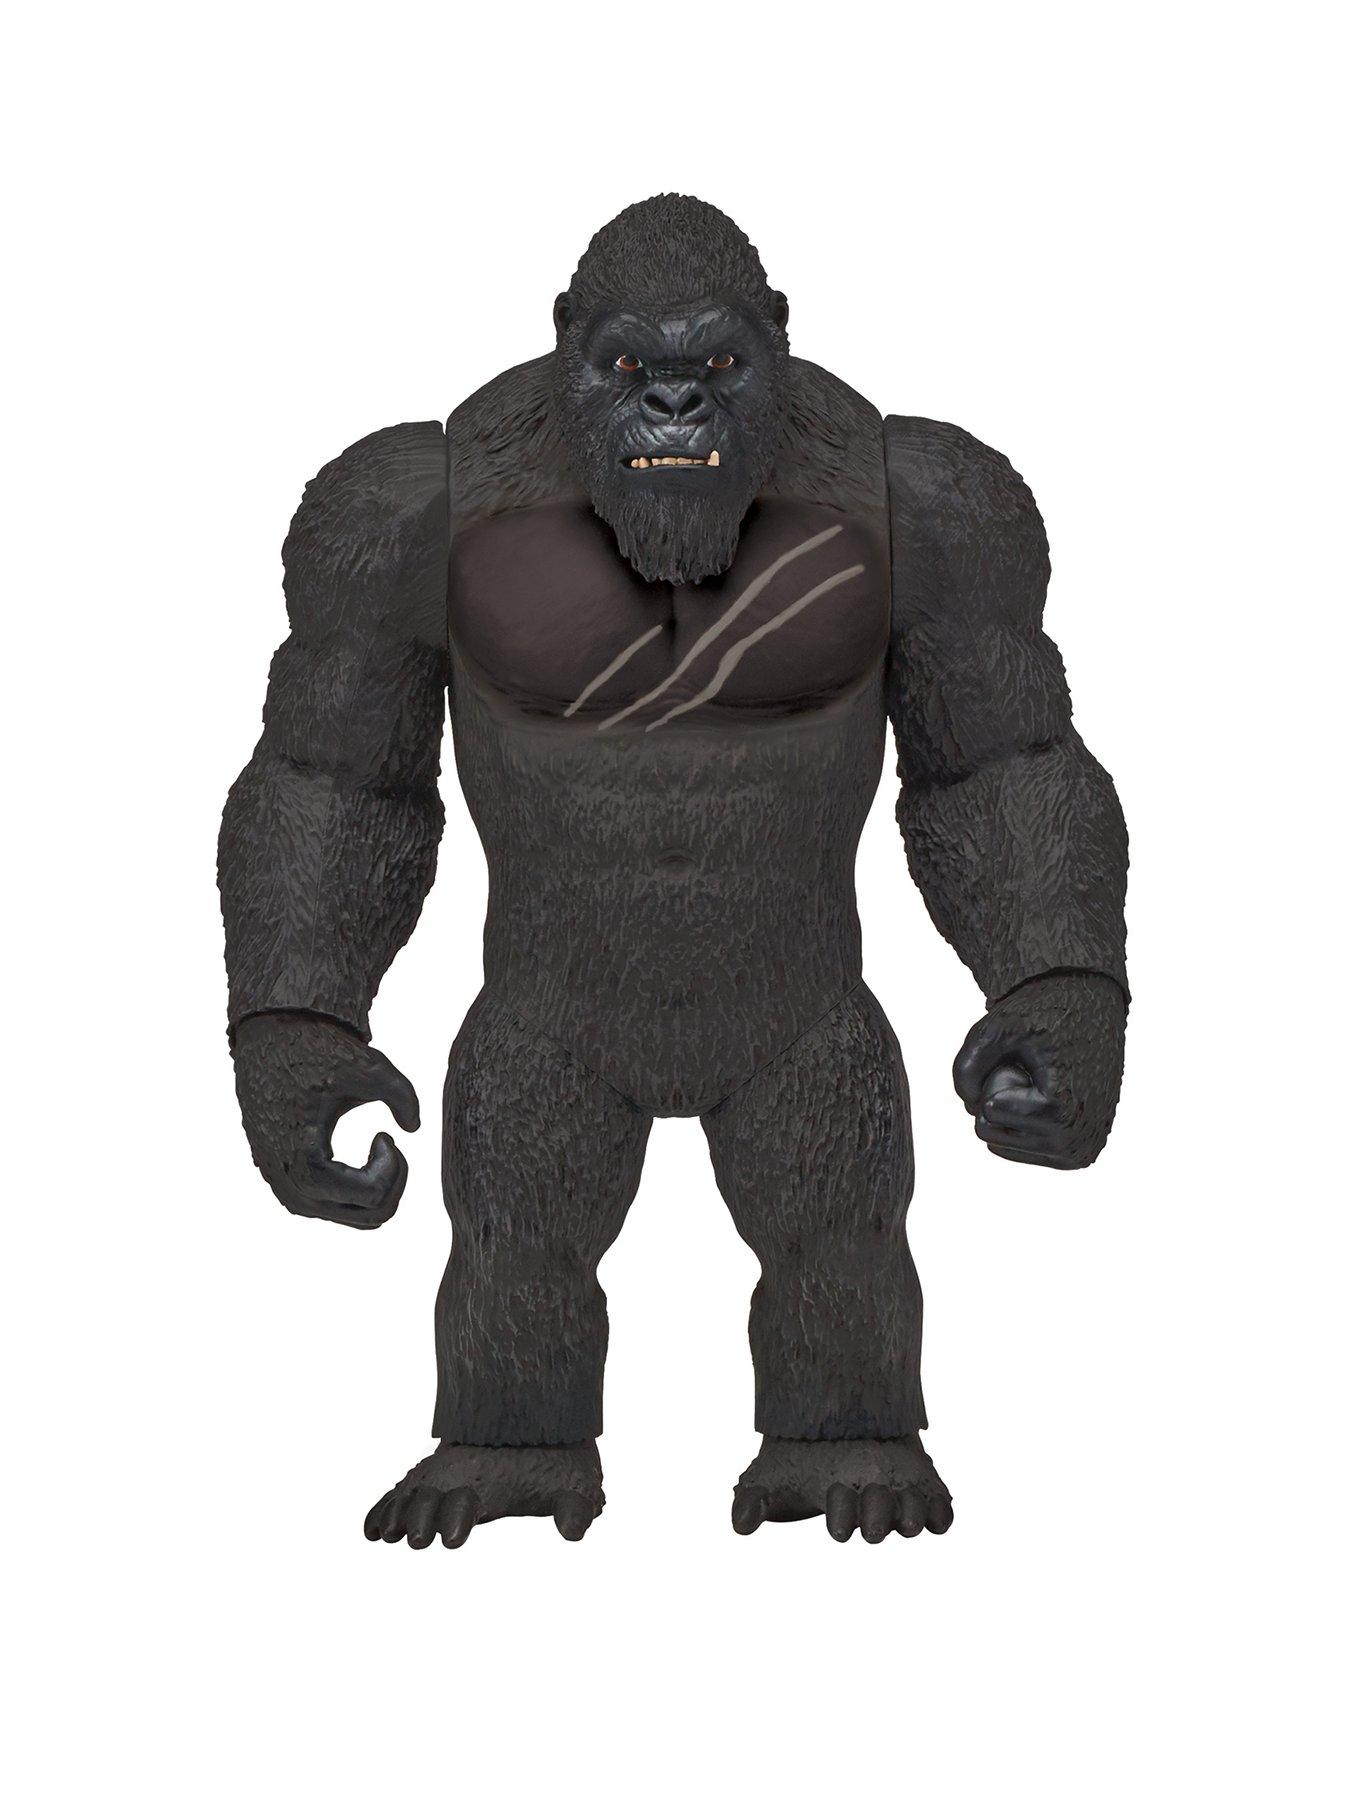 Monsterverse Godzilla vs Kong 11 Giant King Kong